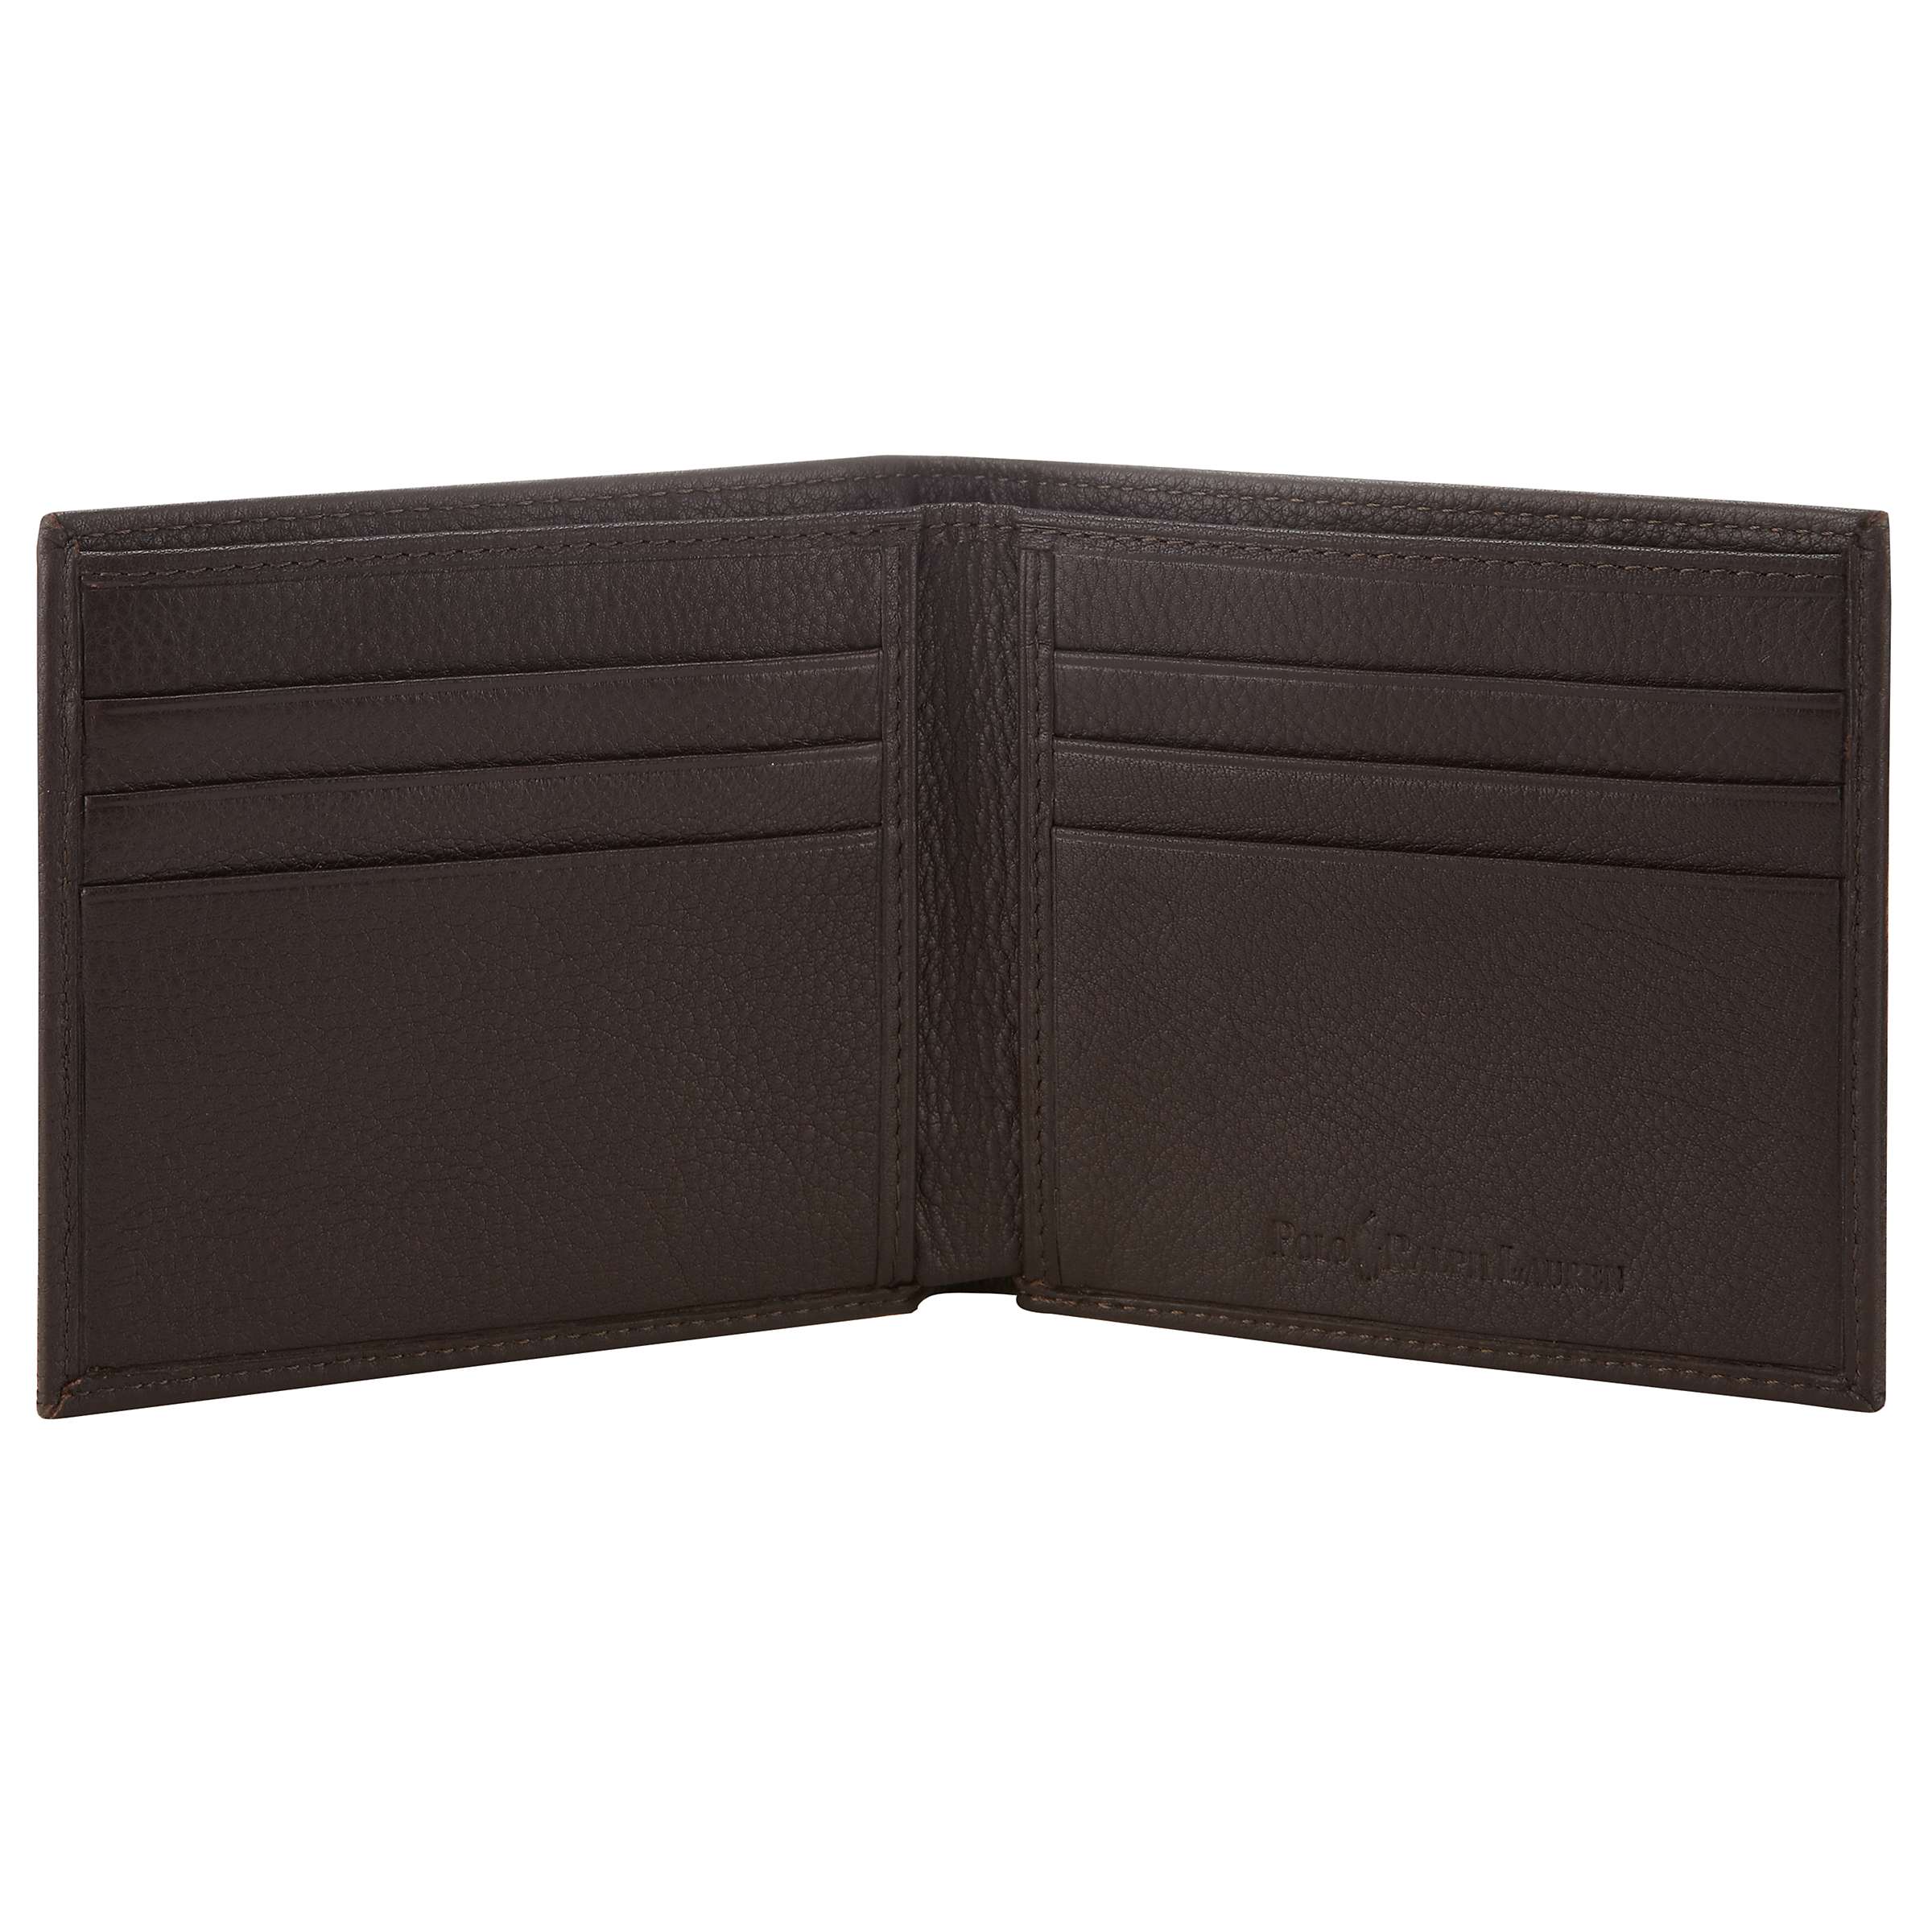 Buy Polo Ralph Lauren Pebble Grain Leather Wallet Online at johnlewis.com